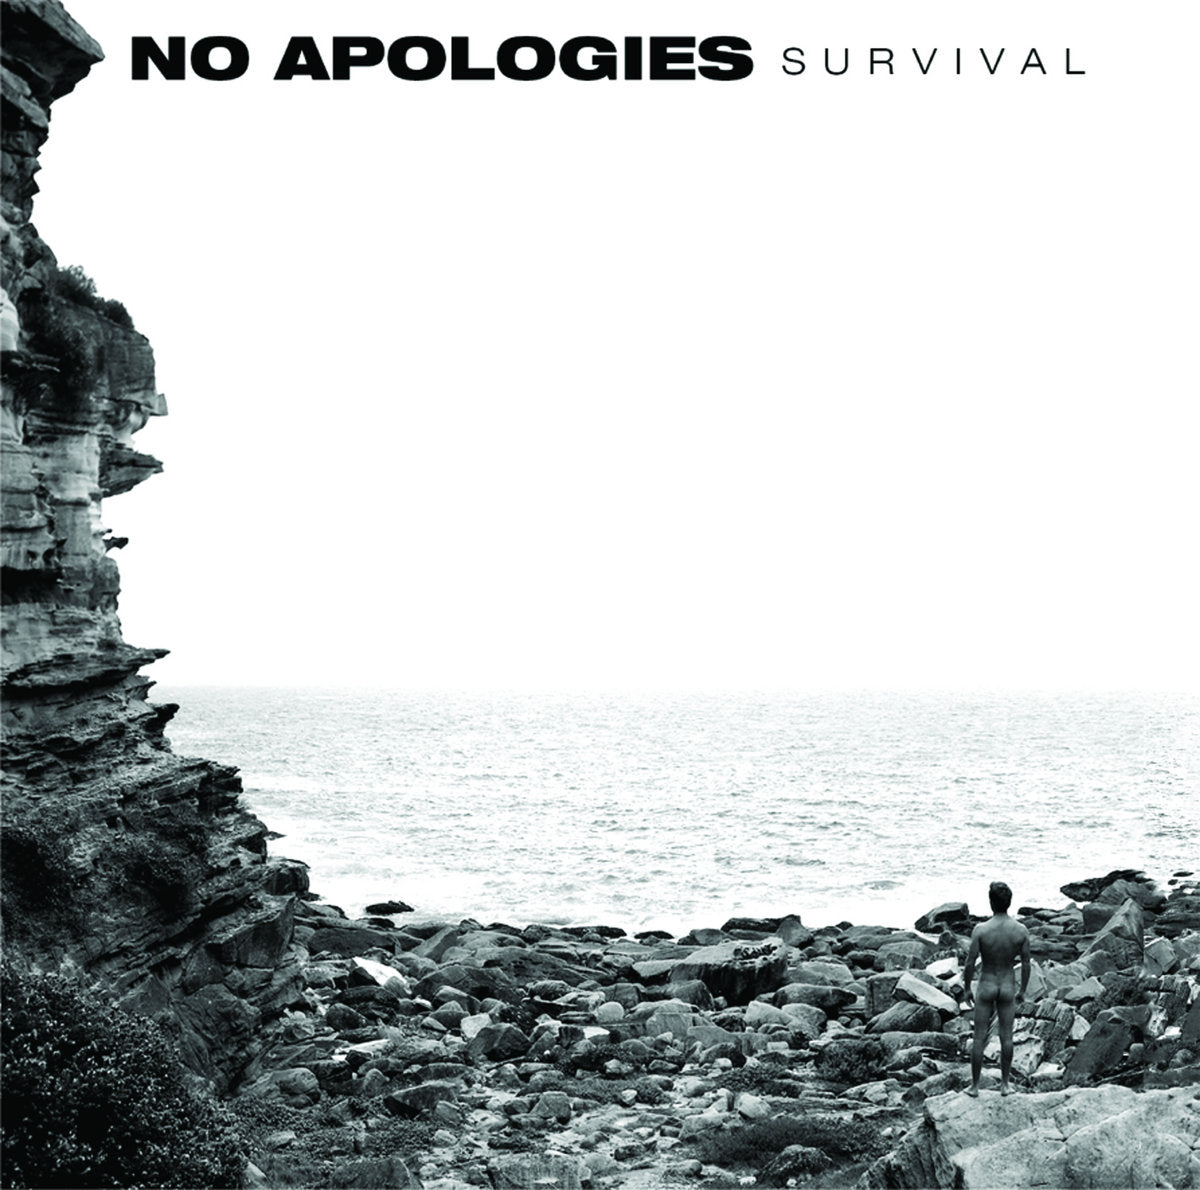 NO APOLOGIES - "SURVIVAL" LP